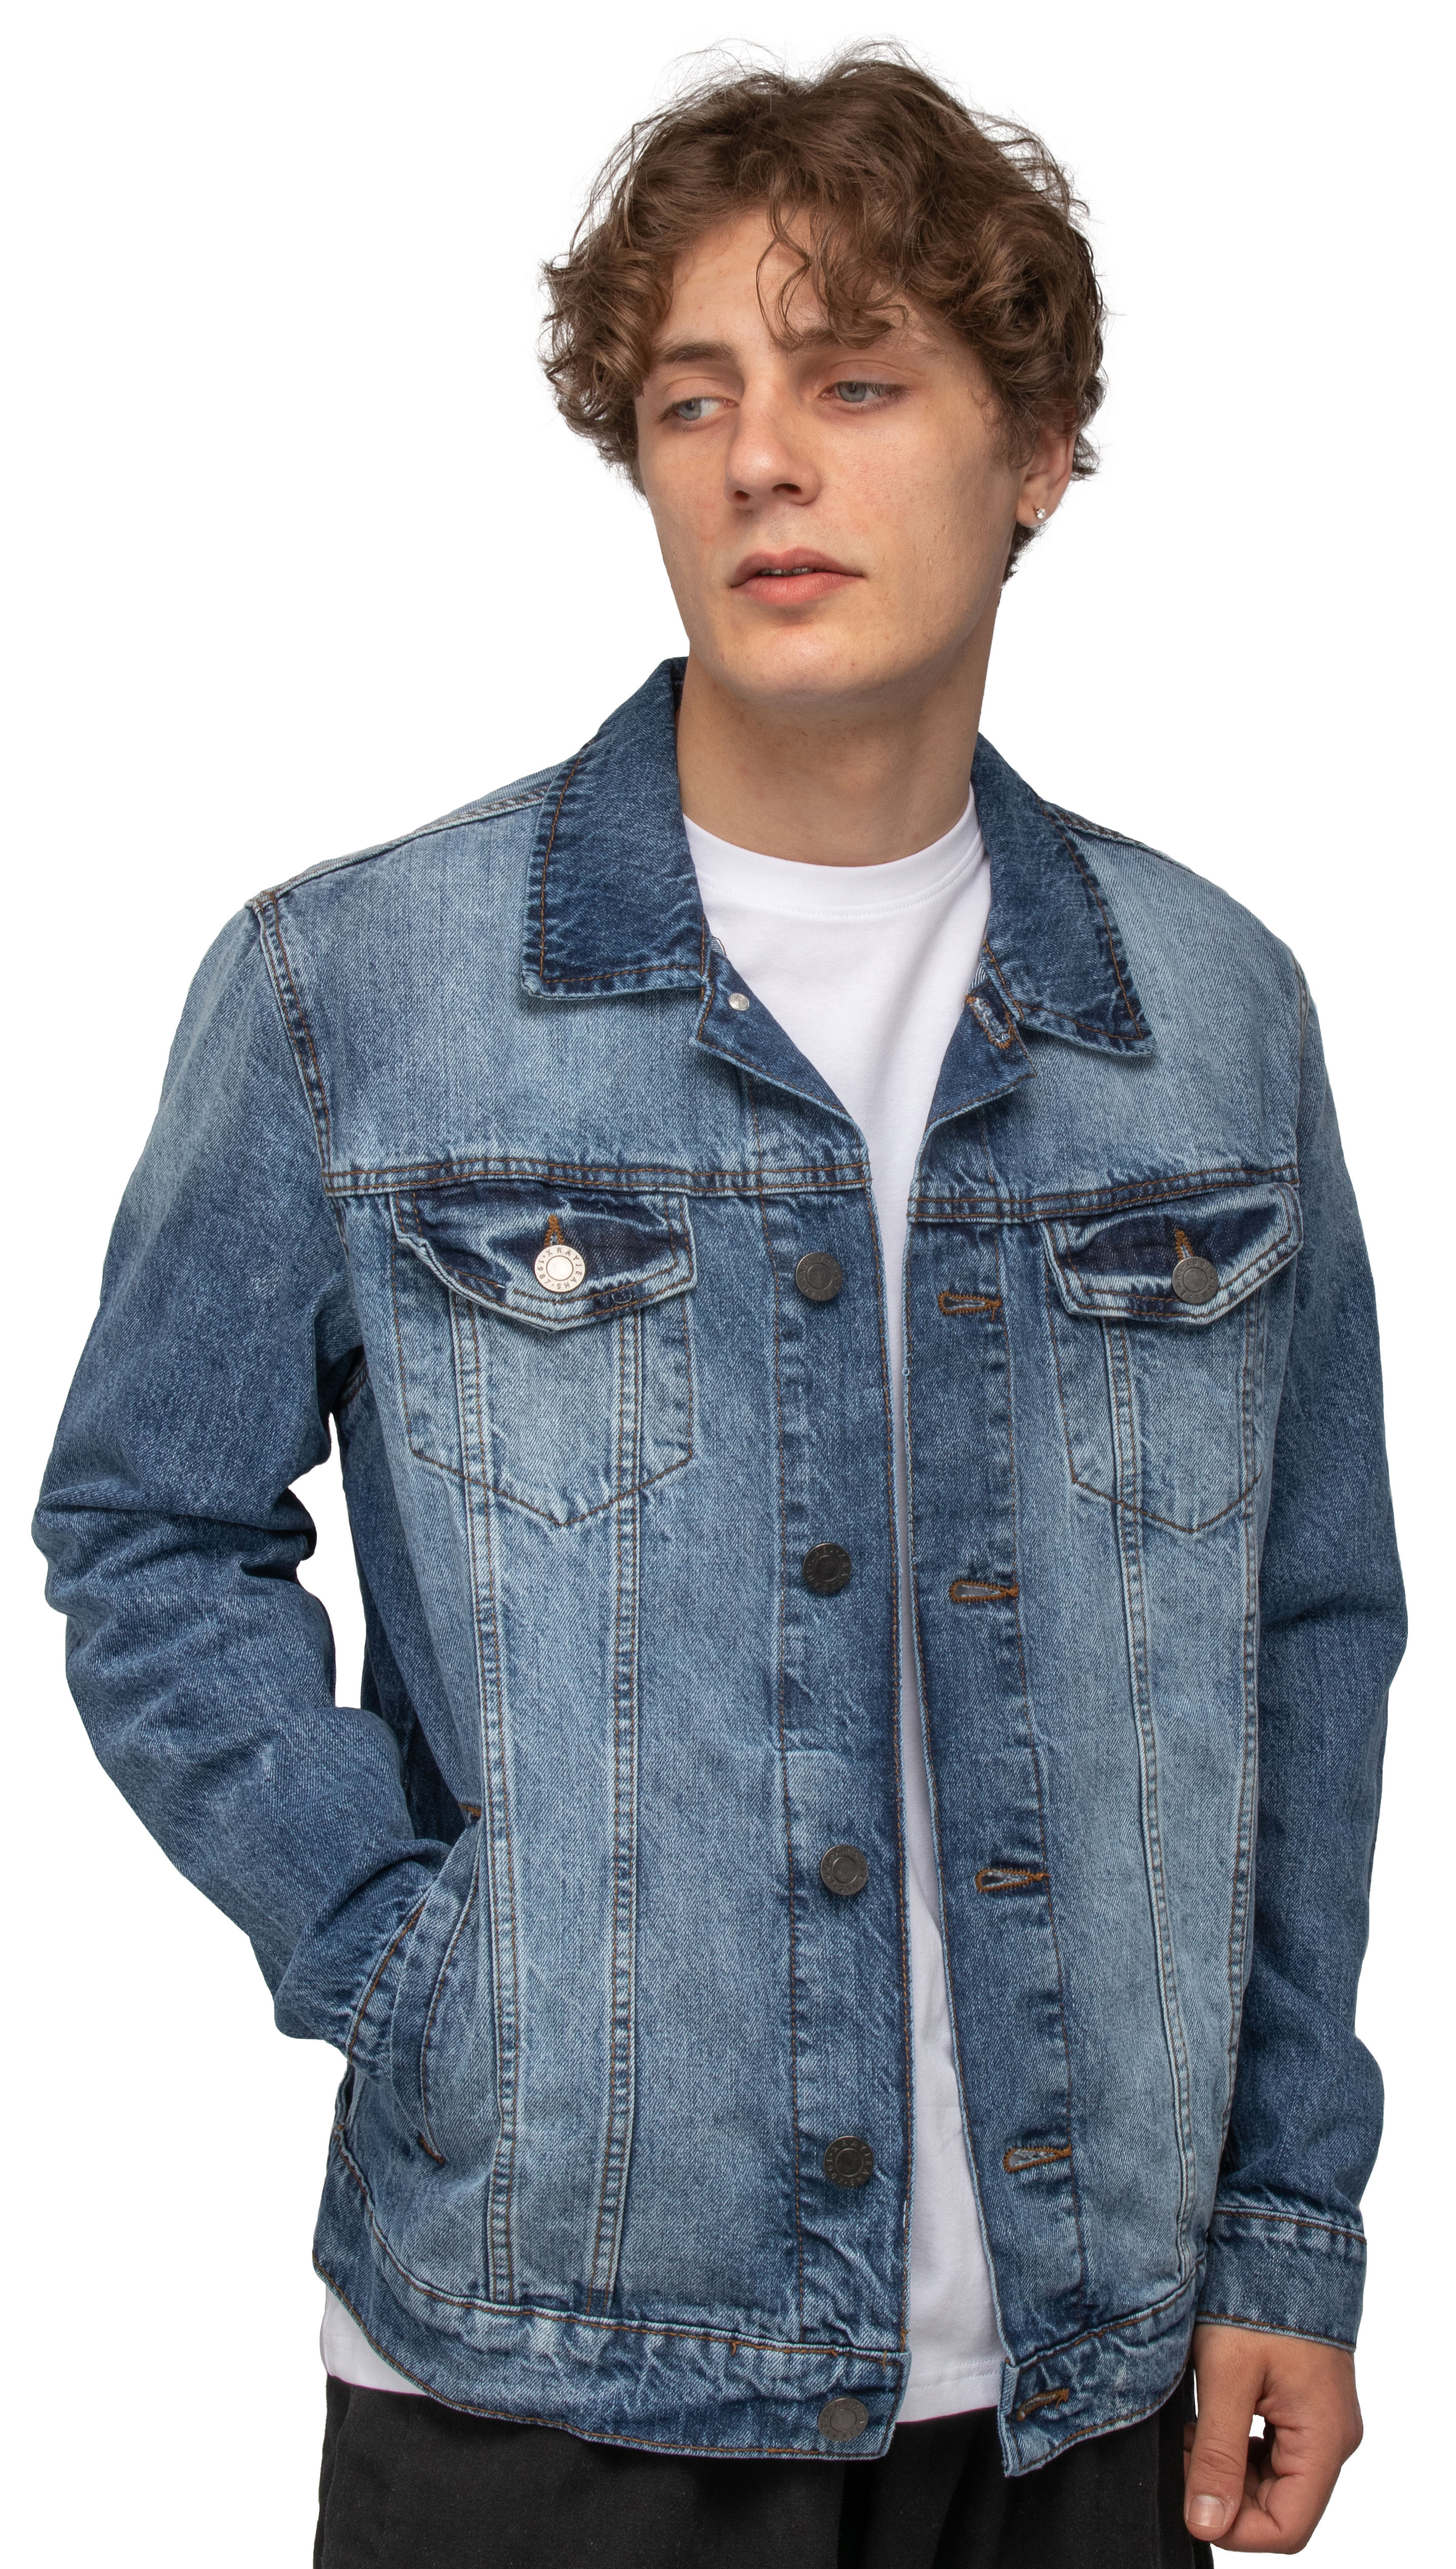 X RAY Men's Denim Jacket, Washed Ripped Distressed Flex Stretch Casual Trucker Biker Jean Jacket, Medium Blue, Large - image 1 of 9